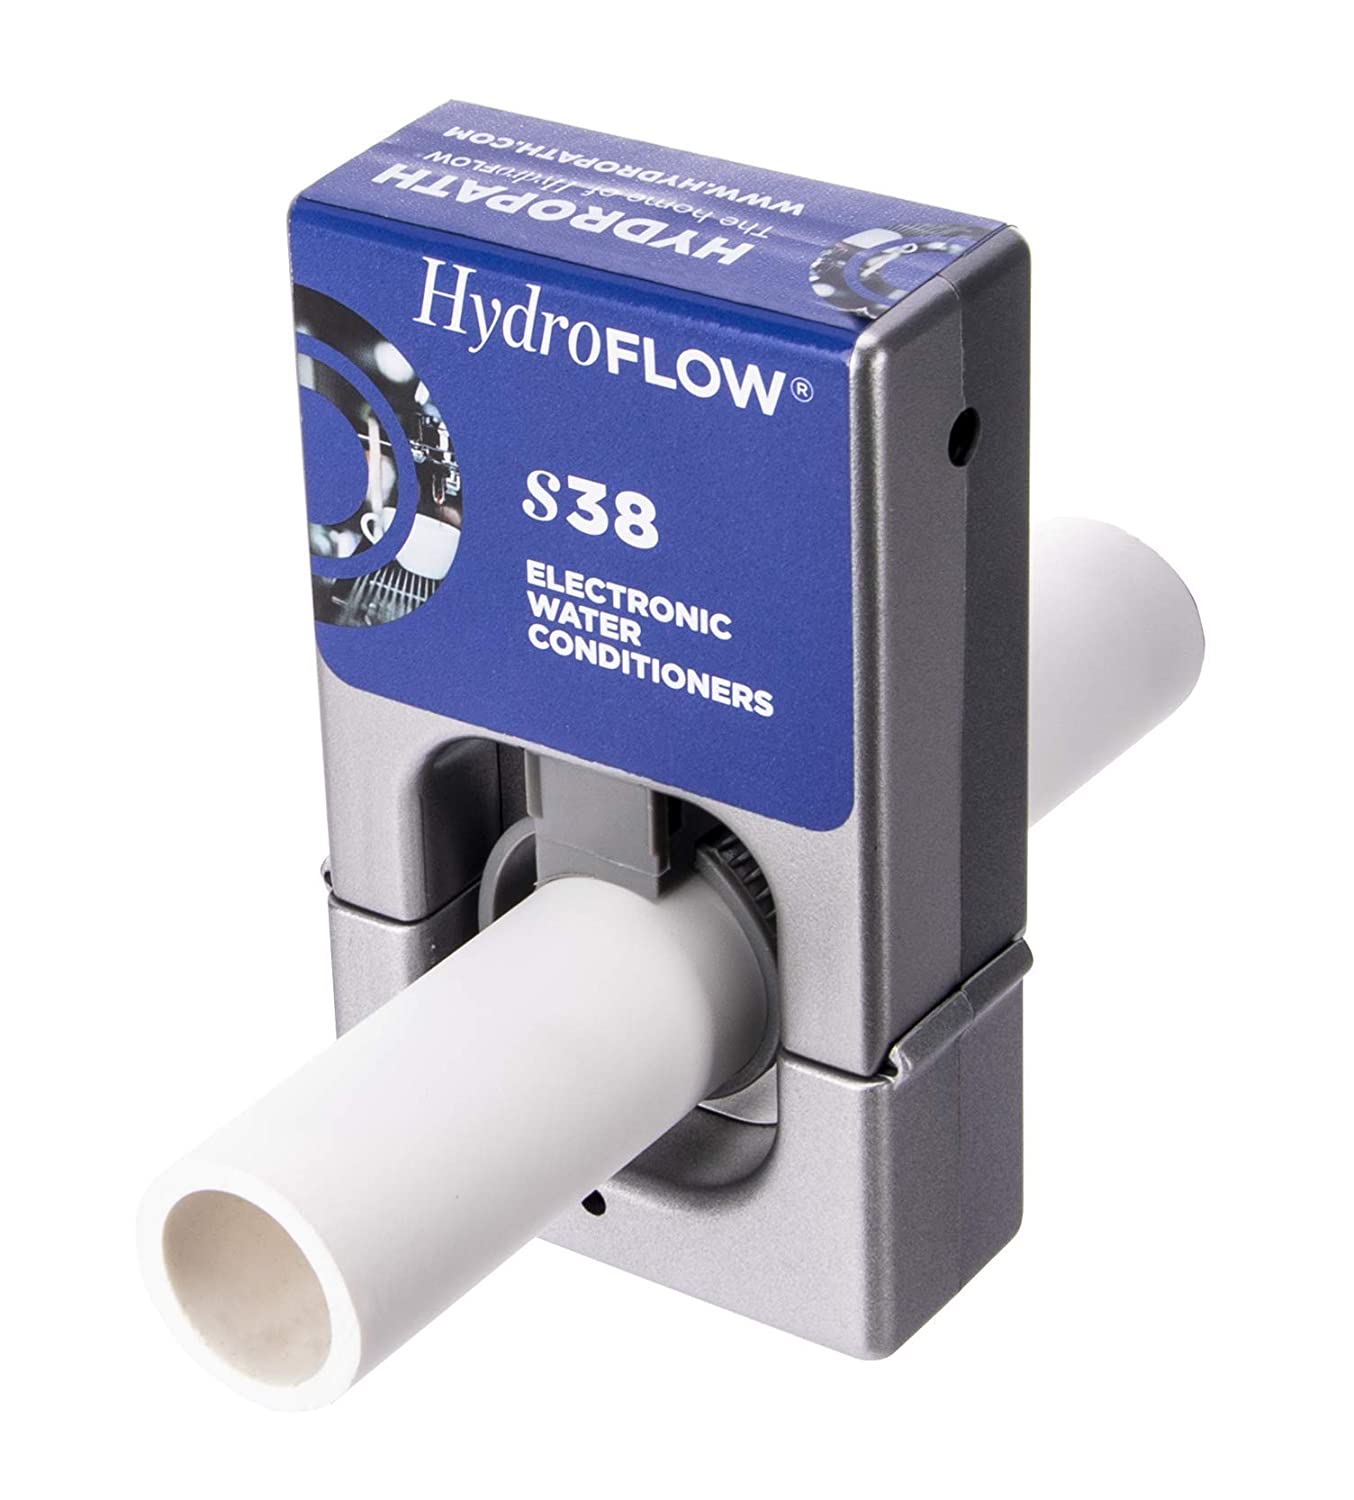 hydroflow water softener